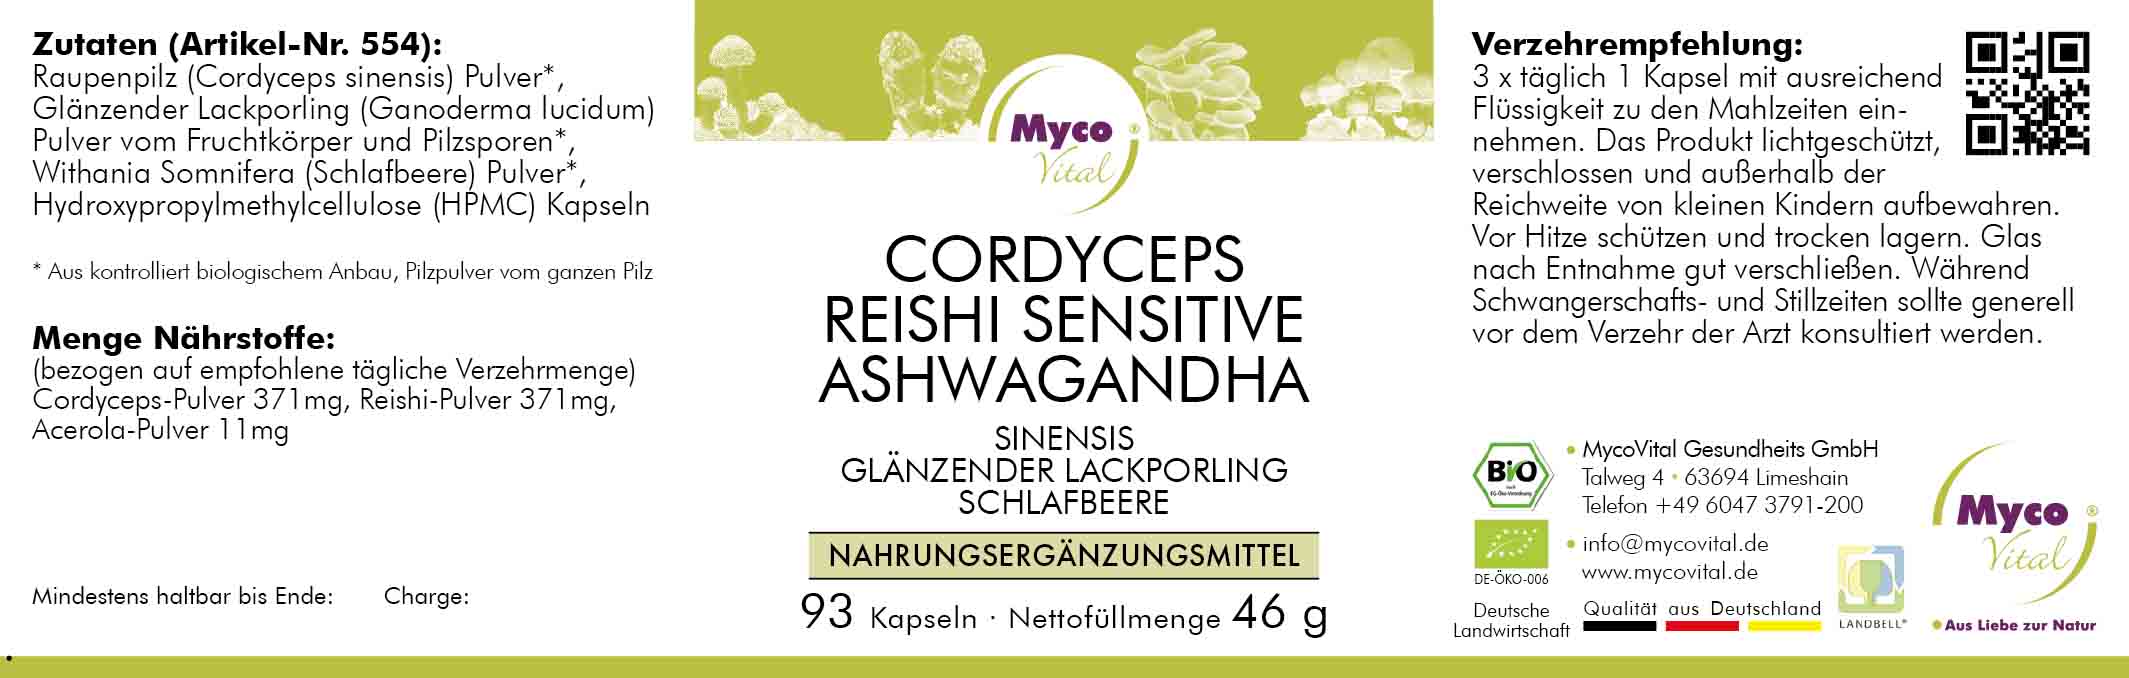 Cordyceps-Reishi sens. ashwagandha organic powder capsules (blend 0554)